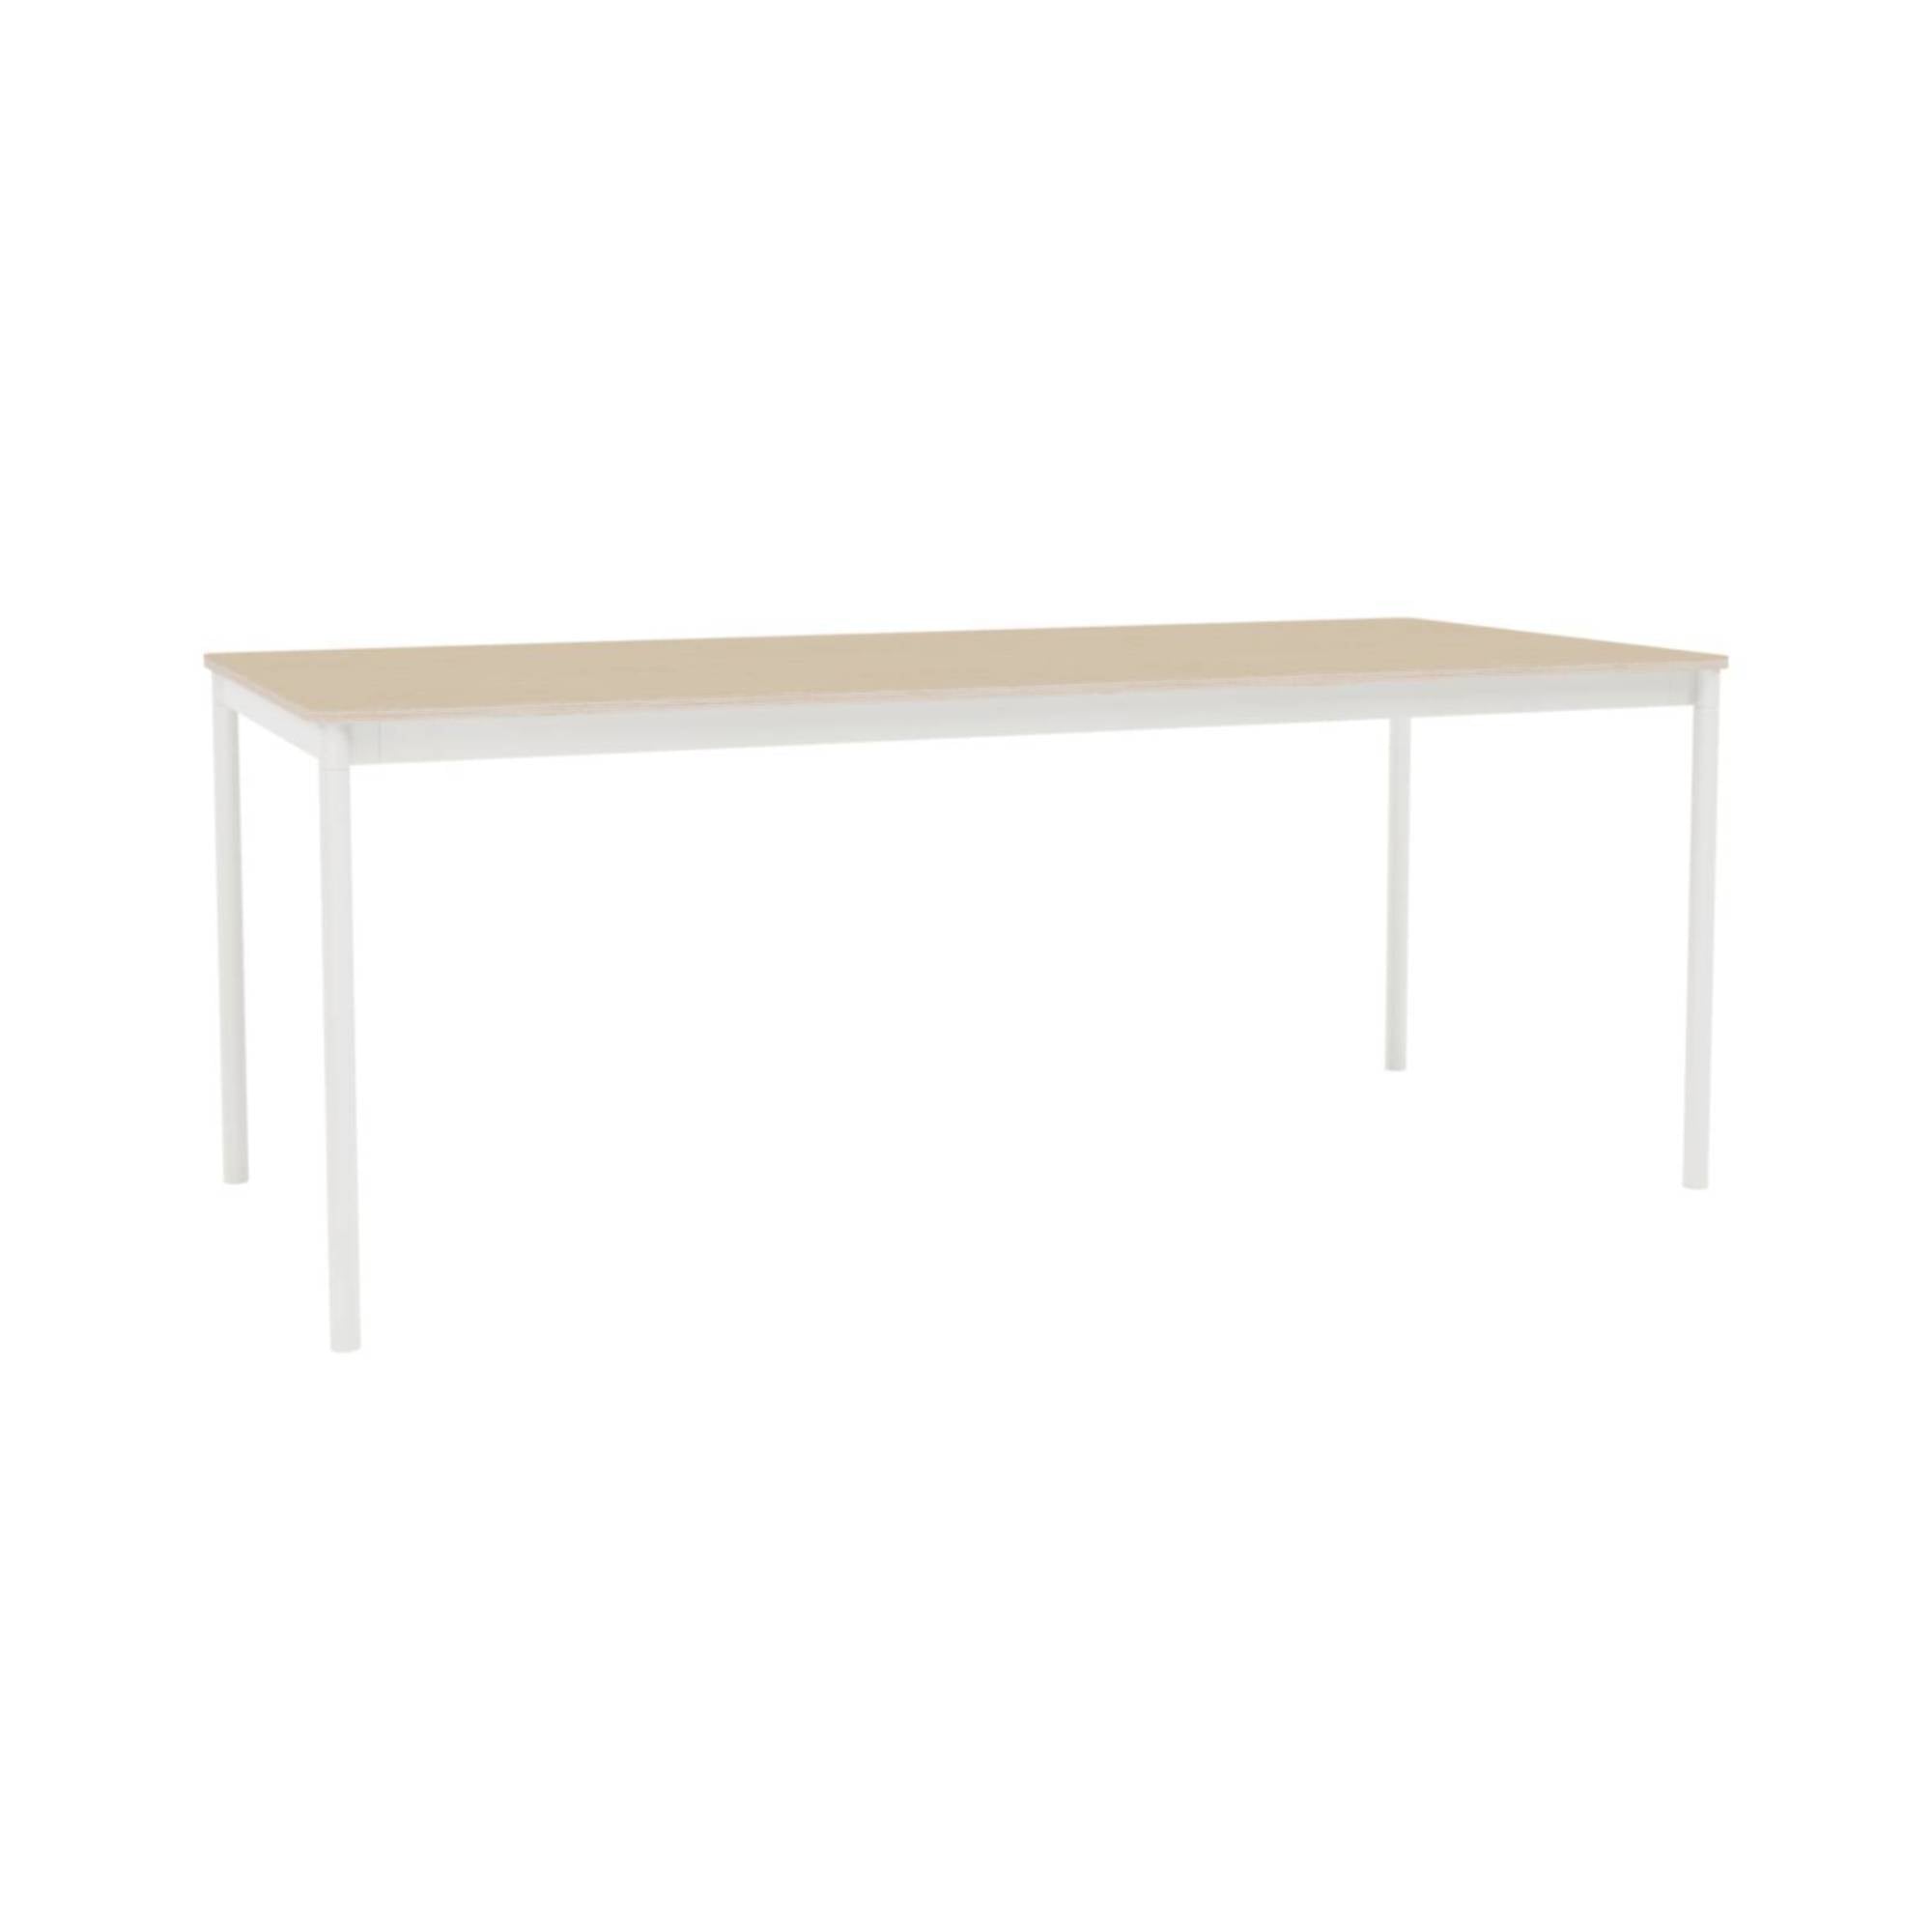 Base Table: Medium + Oak Veneer + Plywood Edge + White